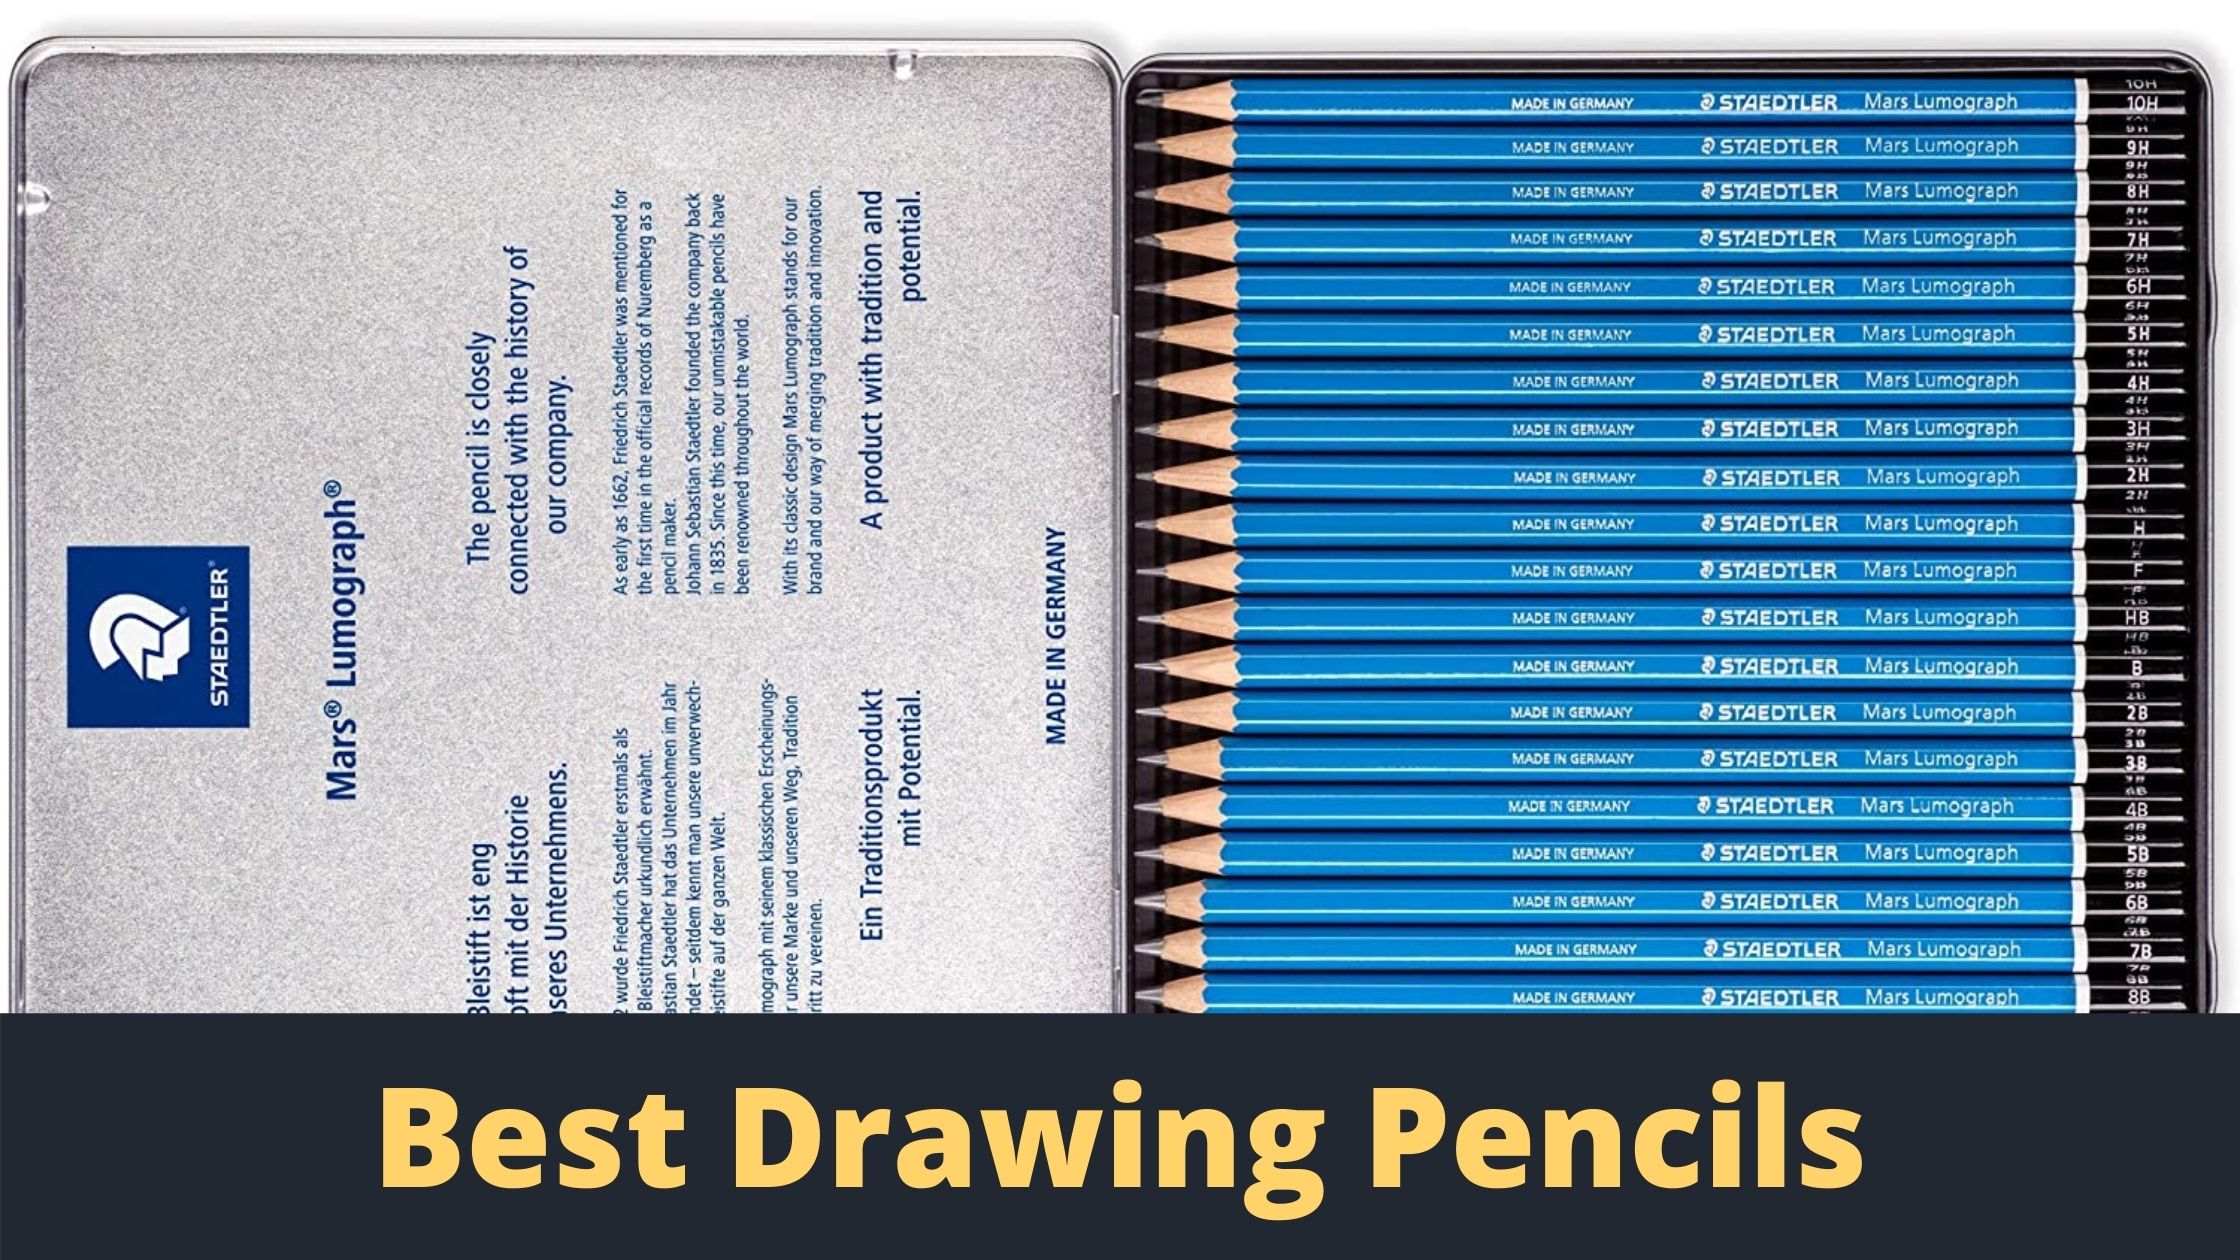 Best drawing pencils